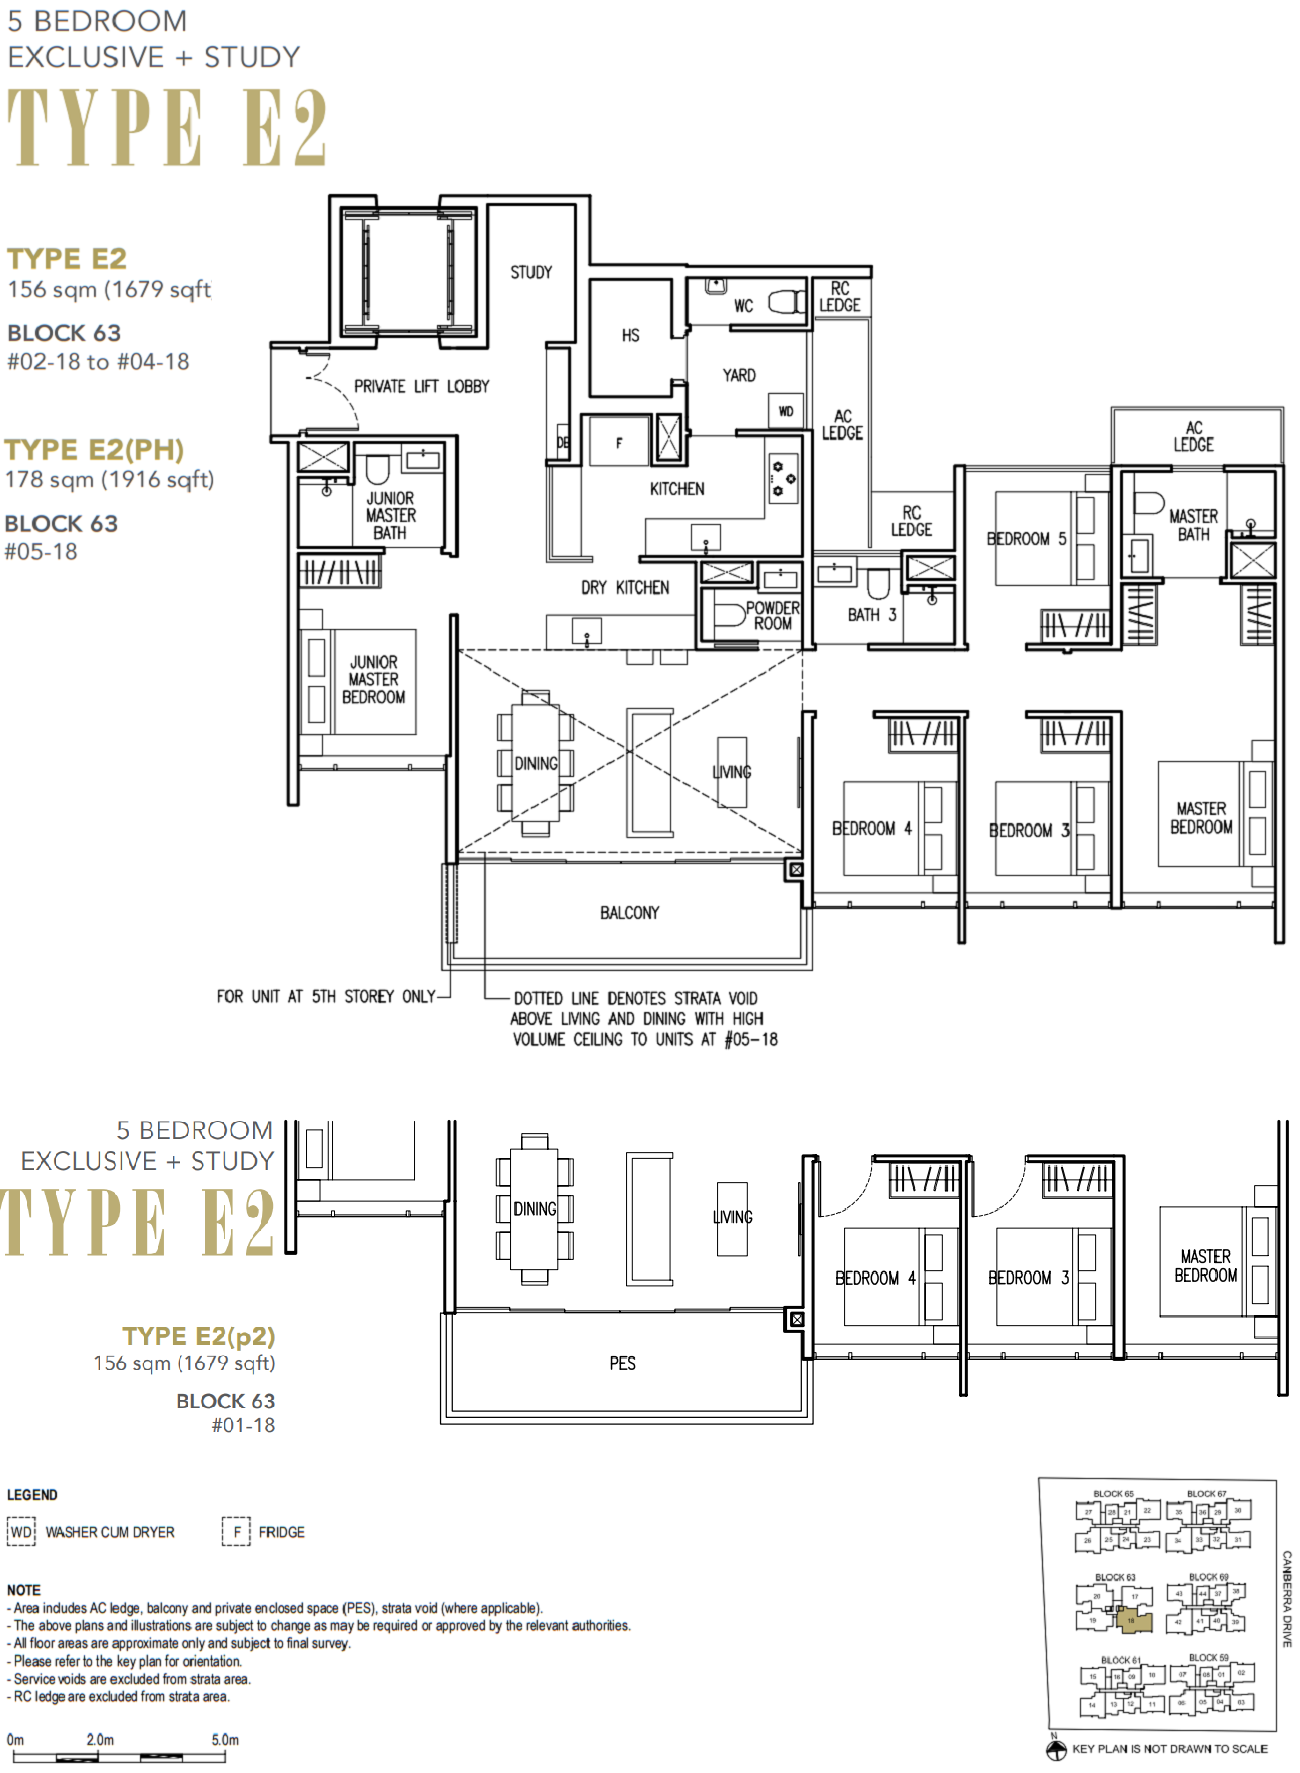 The Commodore Floor Plan 5 Bedroom Exclusive_Study Type E2 & E2(p2) 156_1679